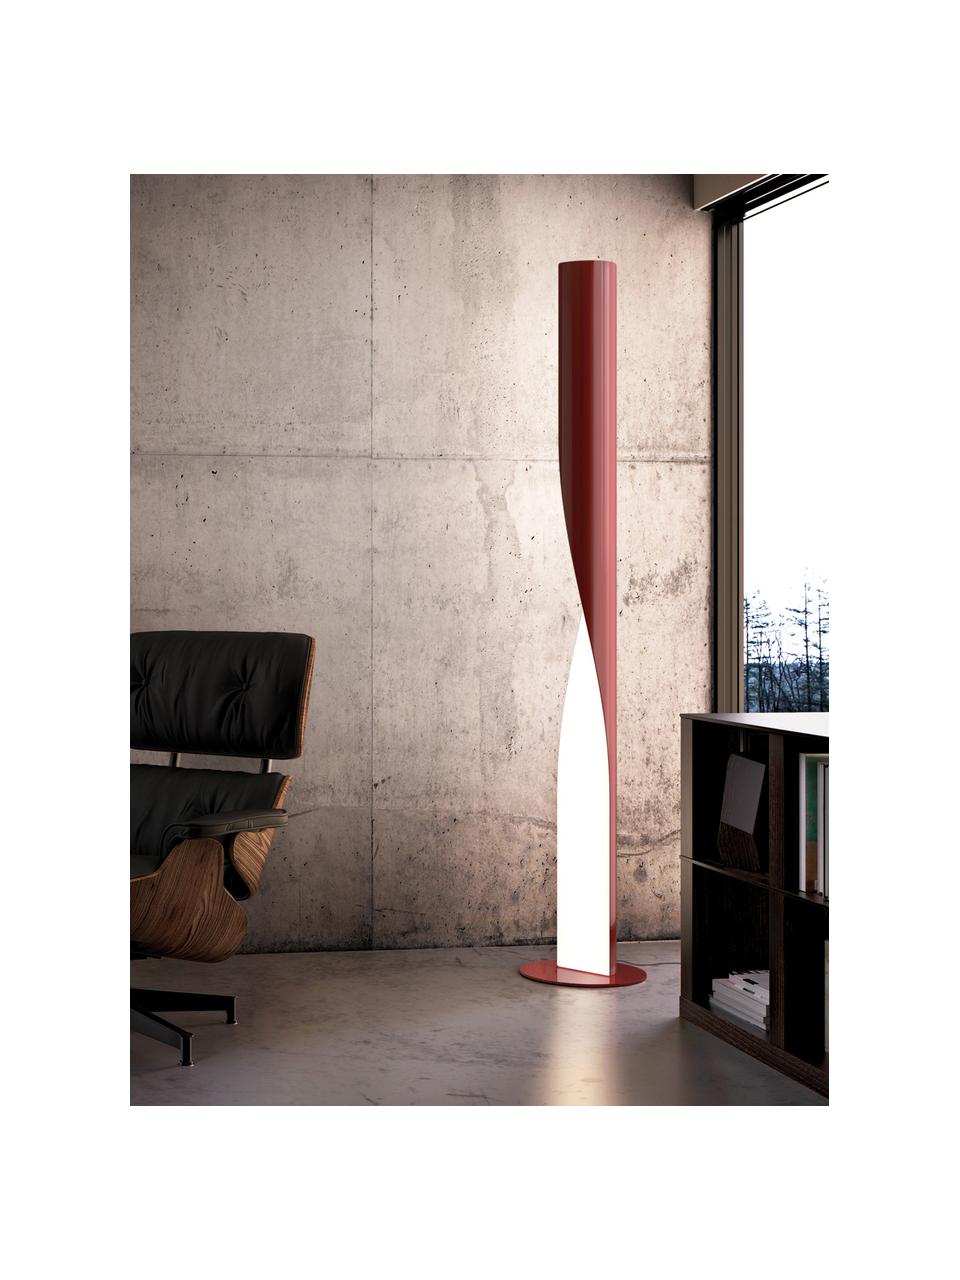 Grosse Stehlampe Evita, dimmbar, Rot, H 190 cm